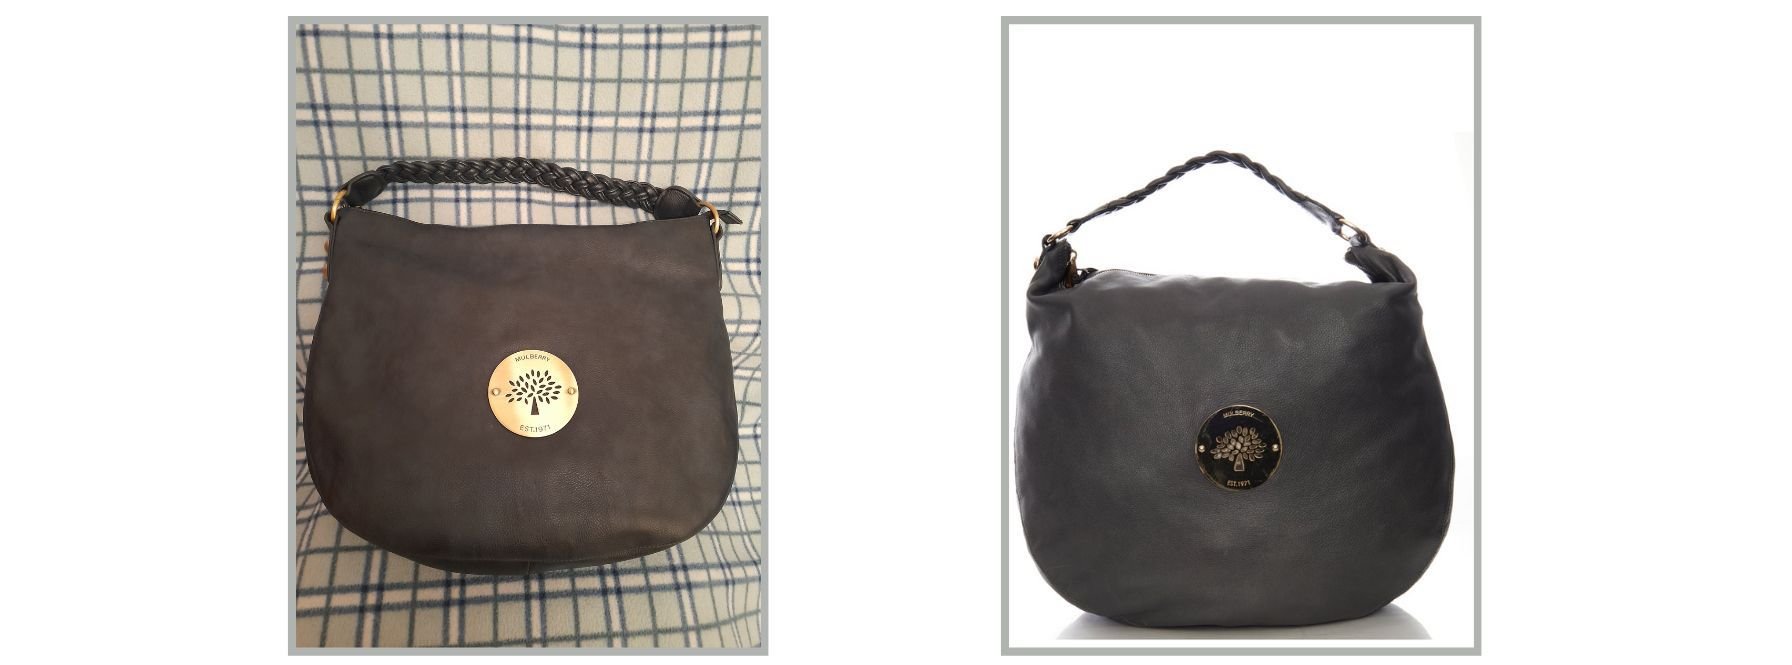 VTG MULBERRY ANTONY Darwin Leather Purse Shoulder Messenger Crossbody Bag  Brown $339.99 - PicClick